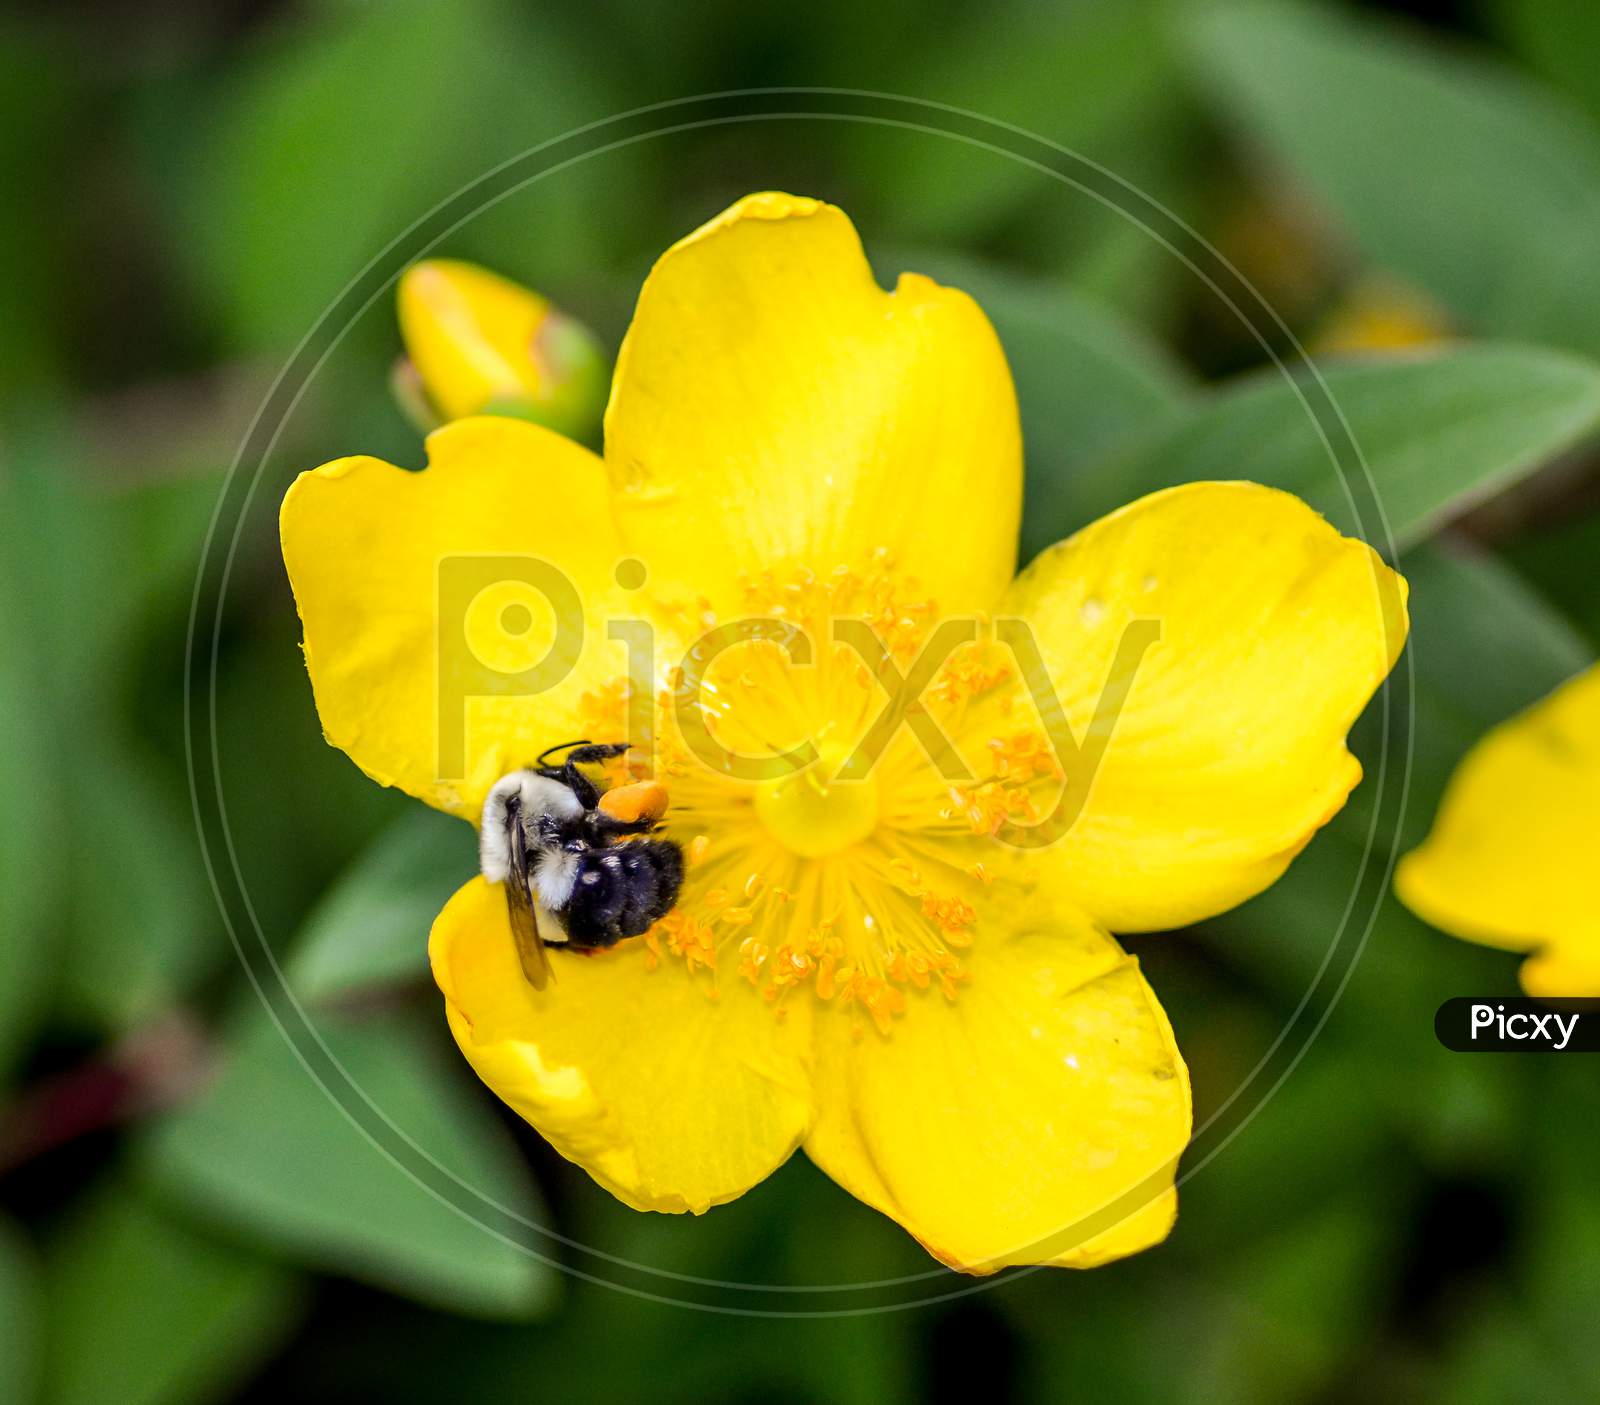 Sleeping Honey bee and yellow flower